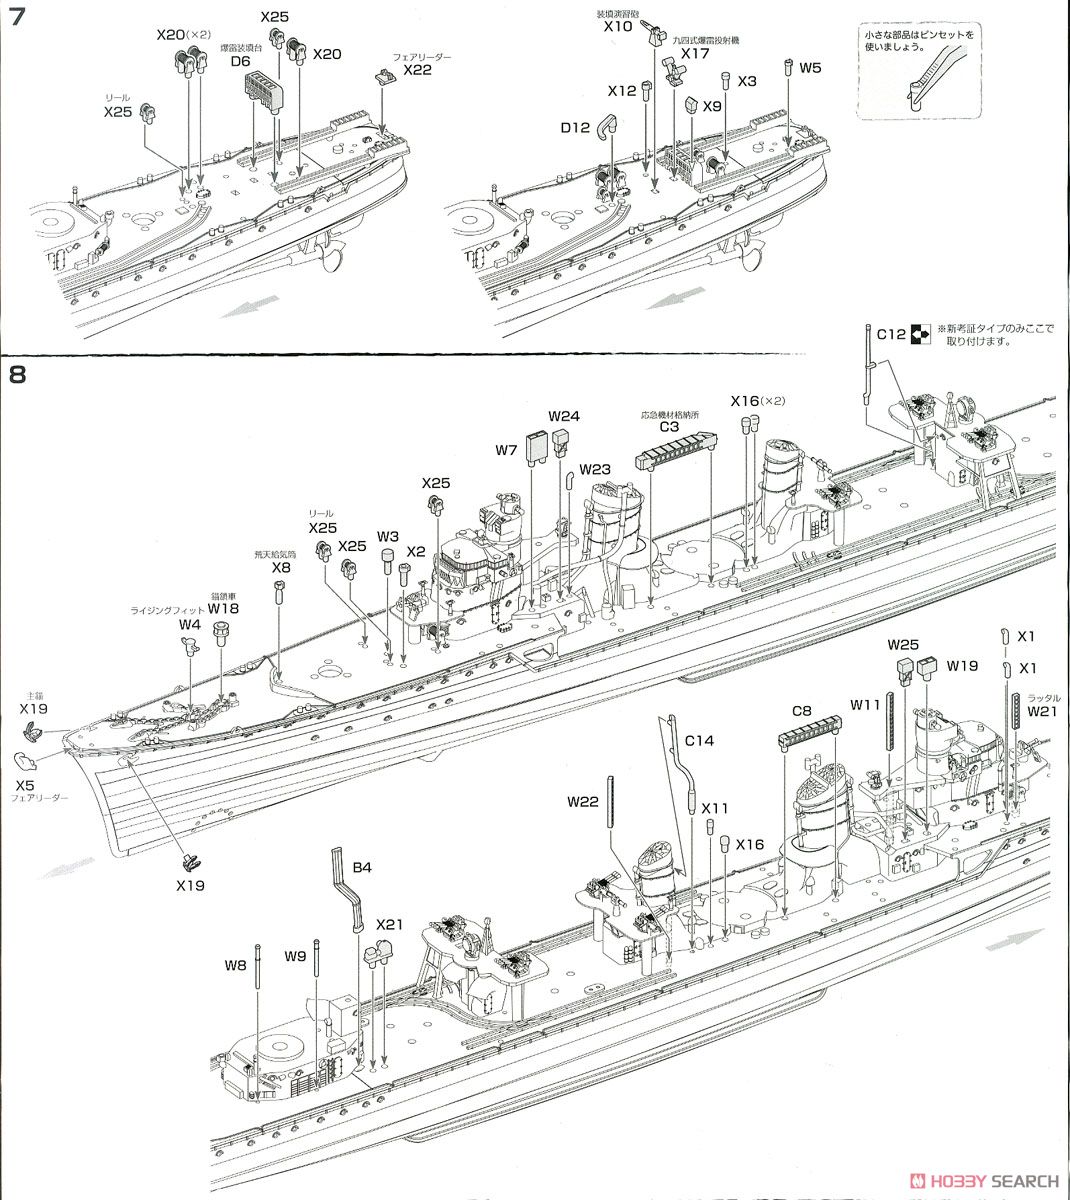 日本海軍駆逐艦 島風 最終時/昭和19年 (プラモデル) 設計図4